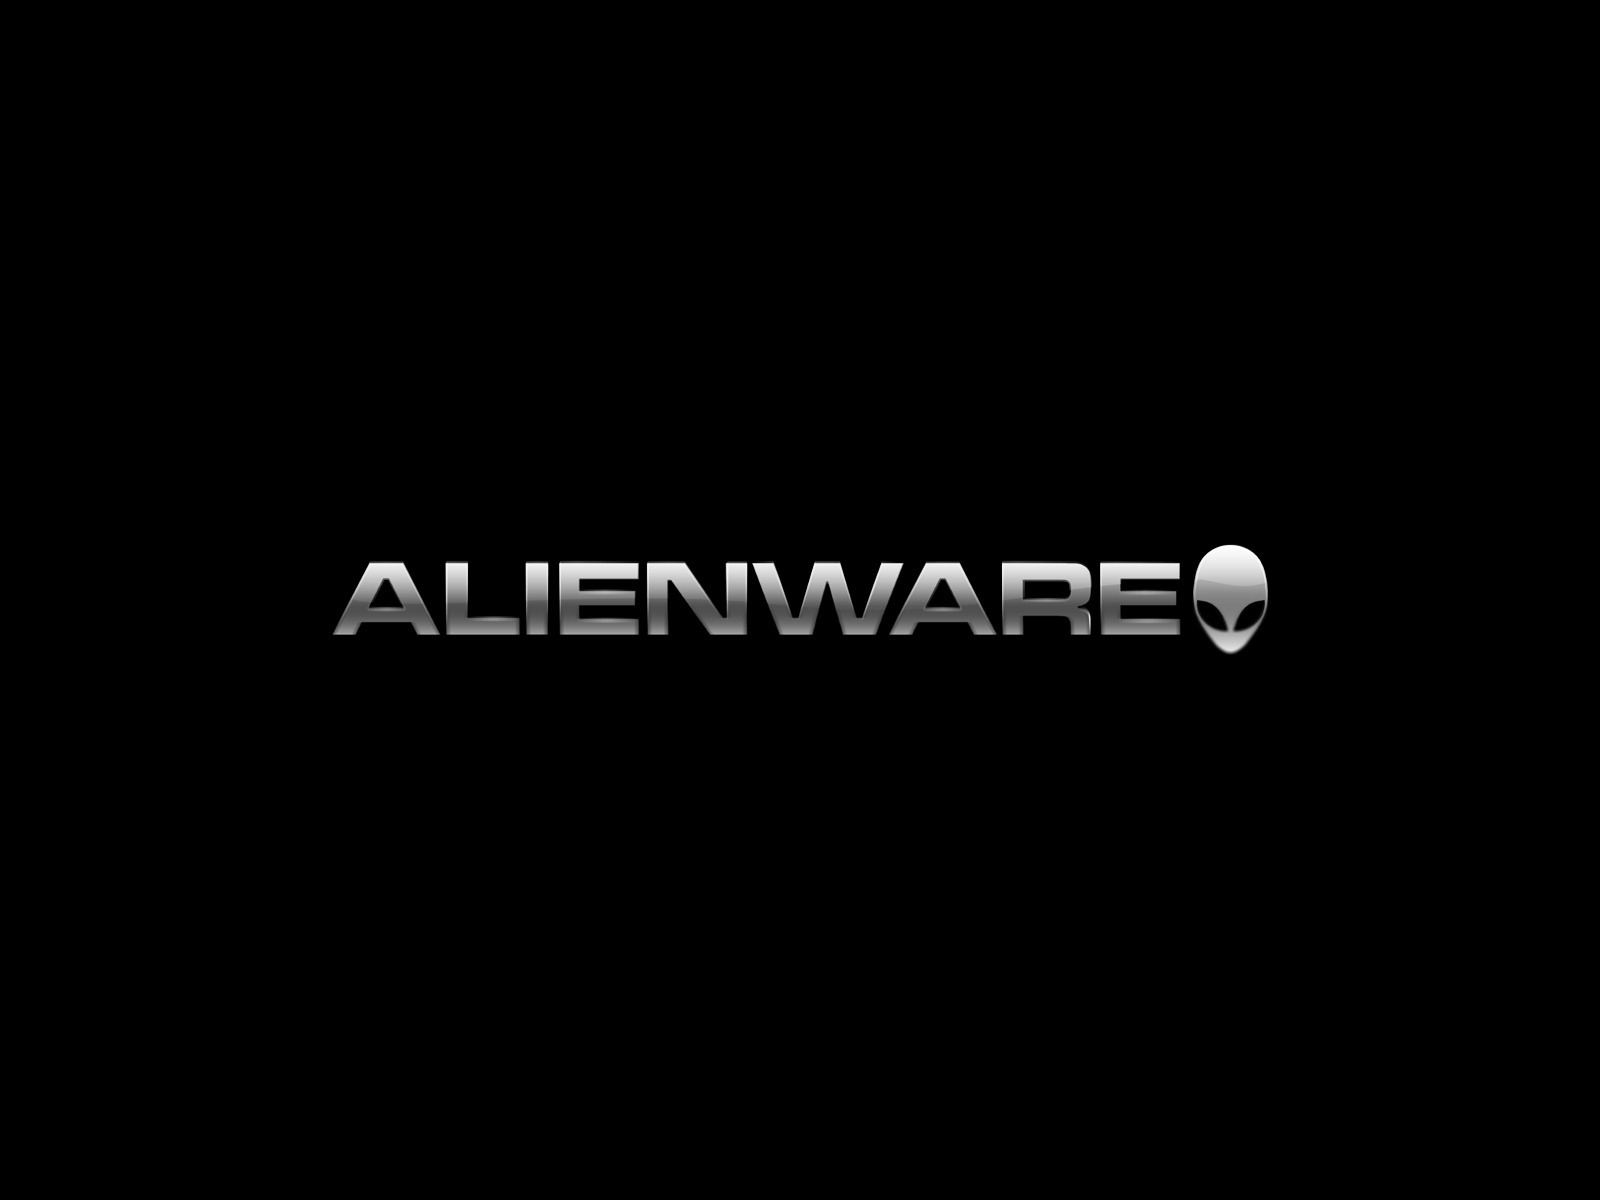 Black Alienware for 1600 x 1200 resolution